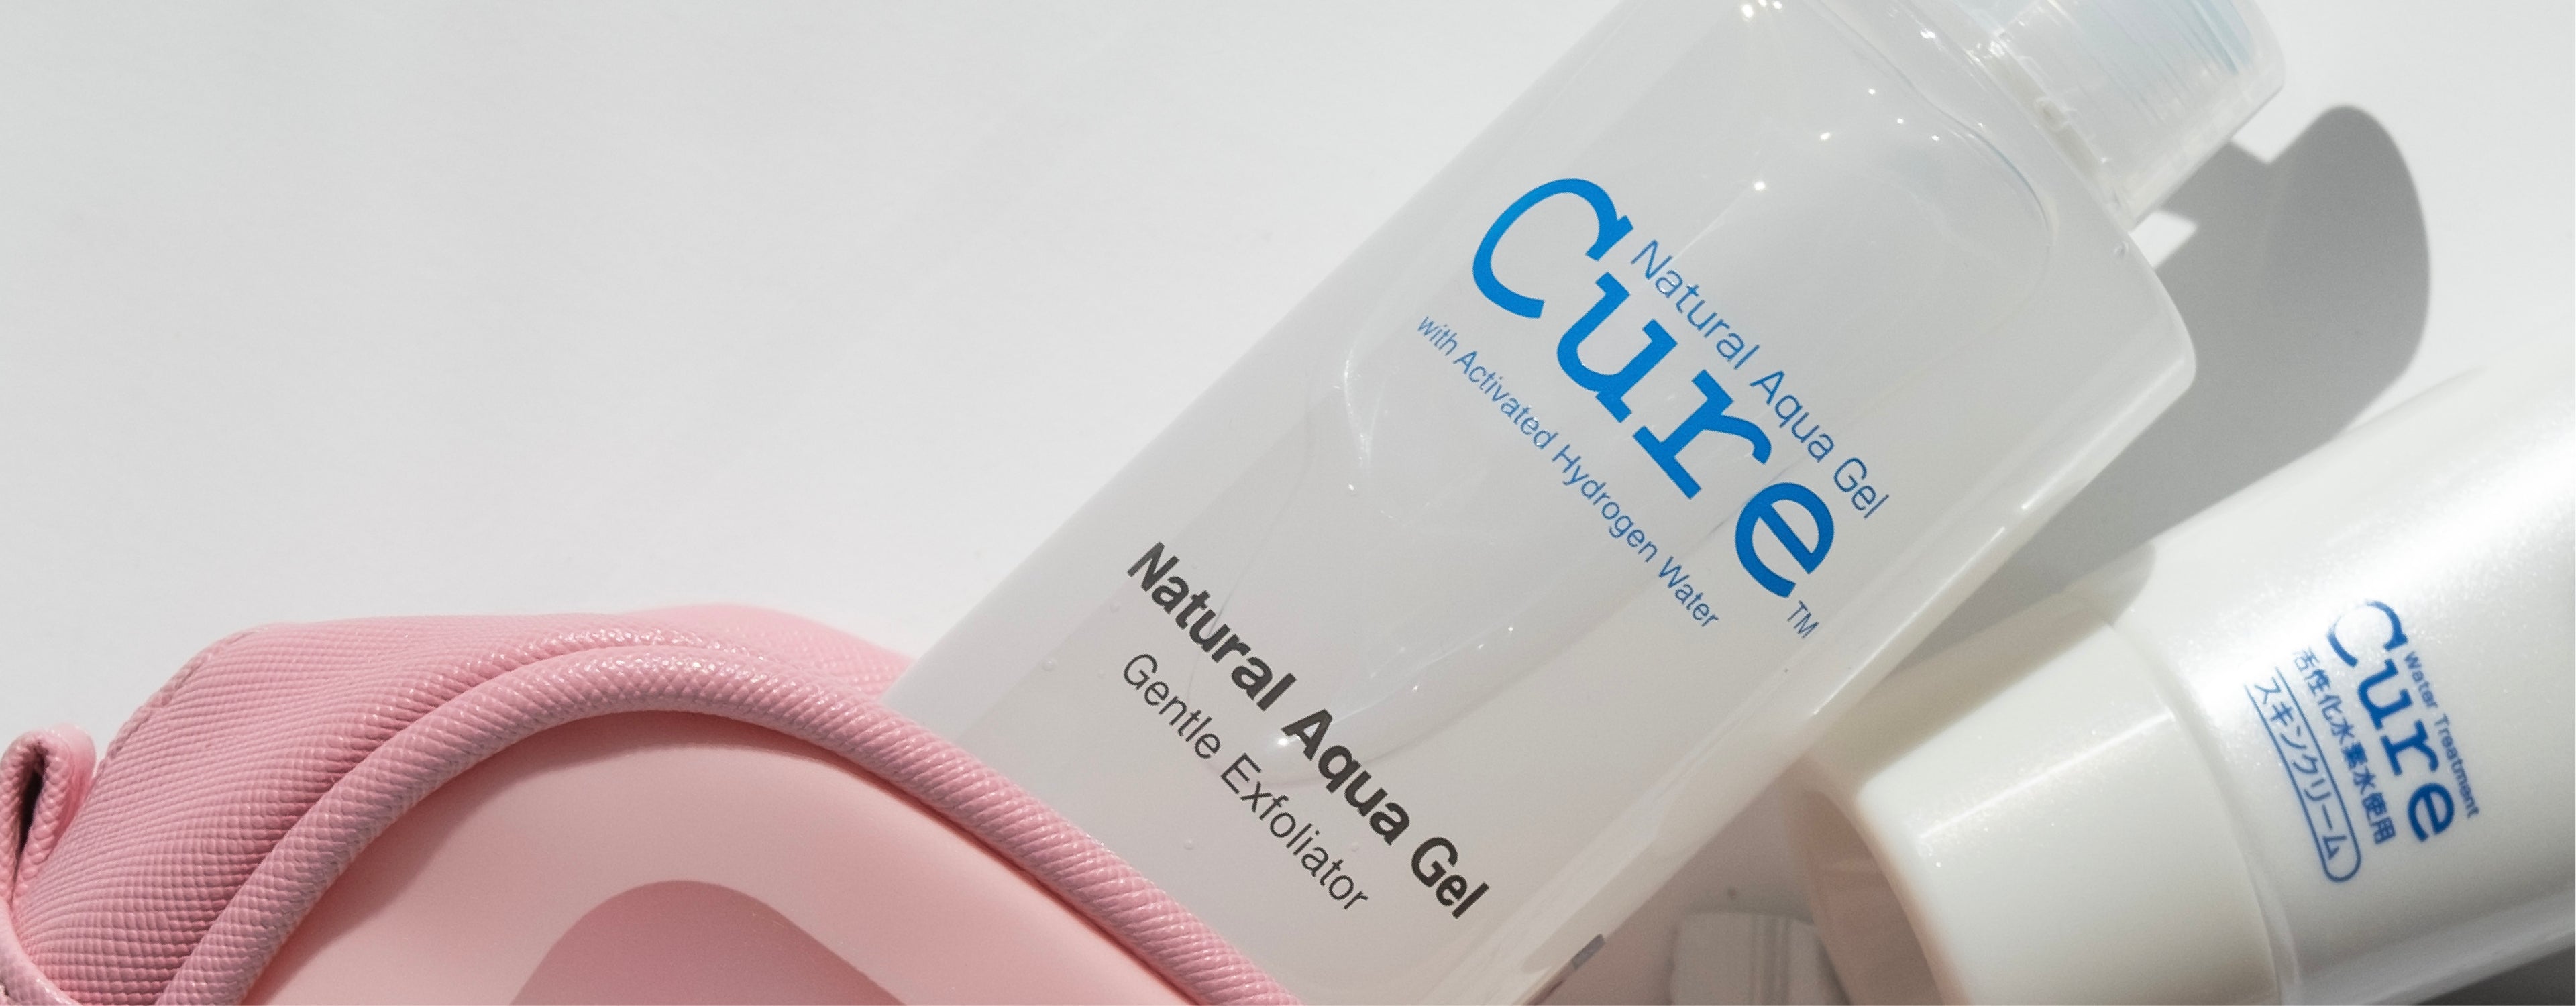 aqua gel exfoliator for sensitive and acne-prone skin